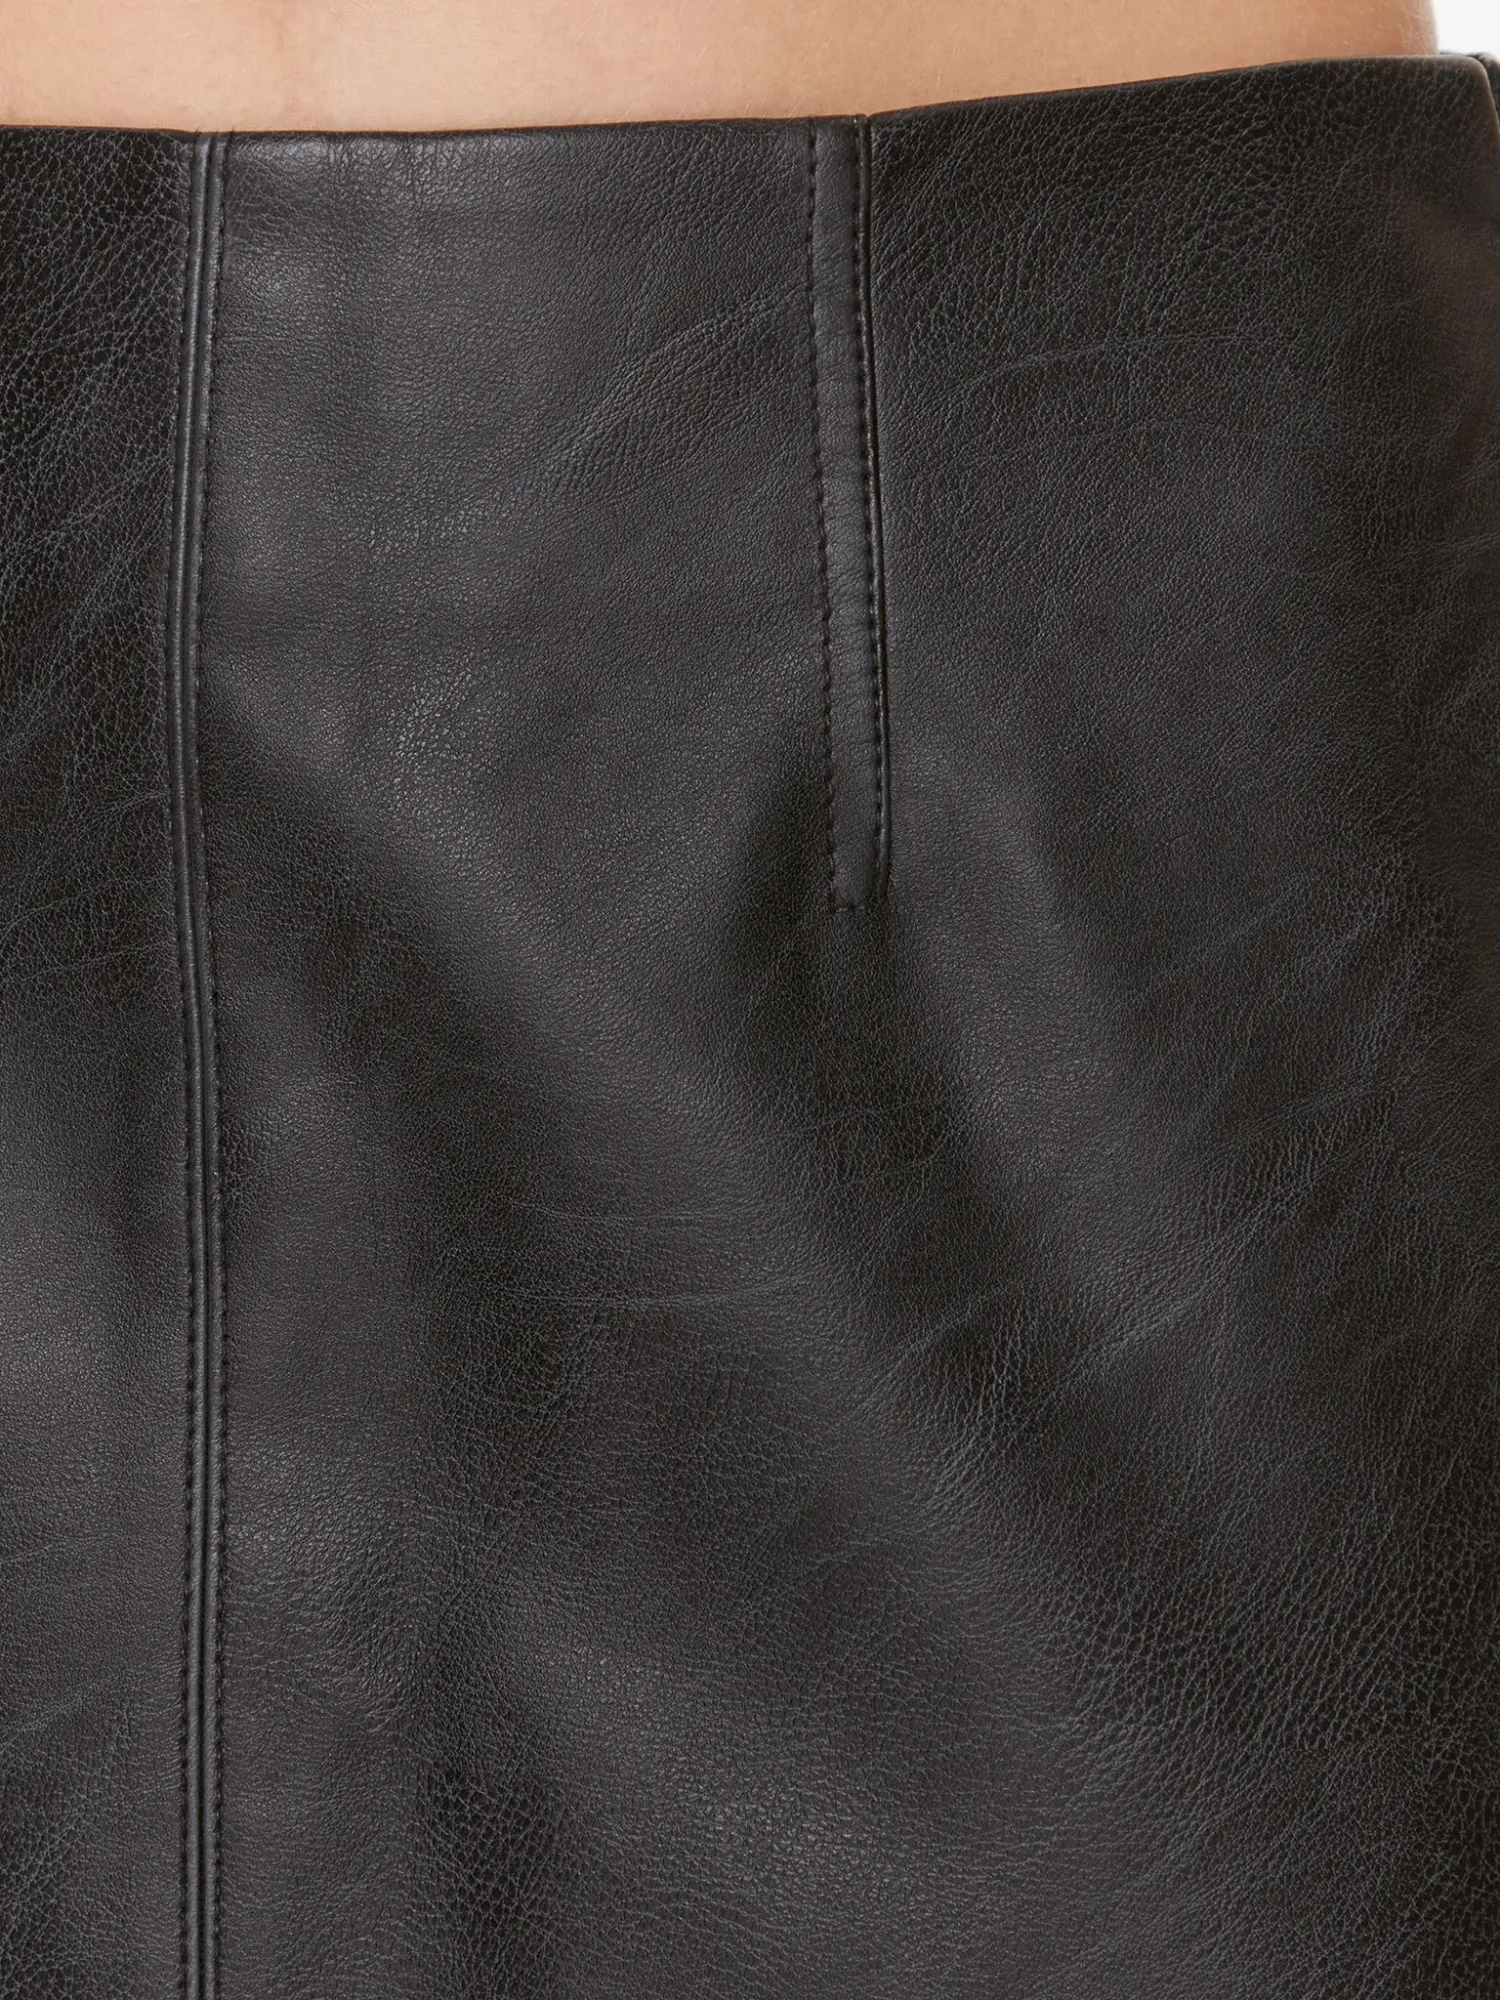 CALVIN KLEIN JEANS Black | Choice+Attitude - CK Leather Skirt Faux